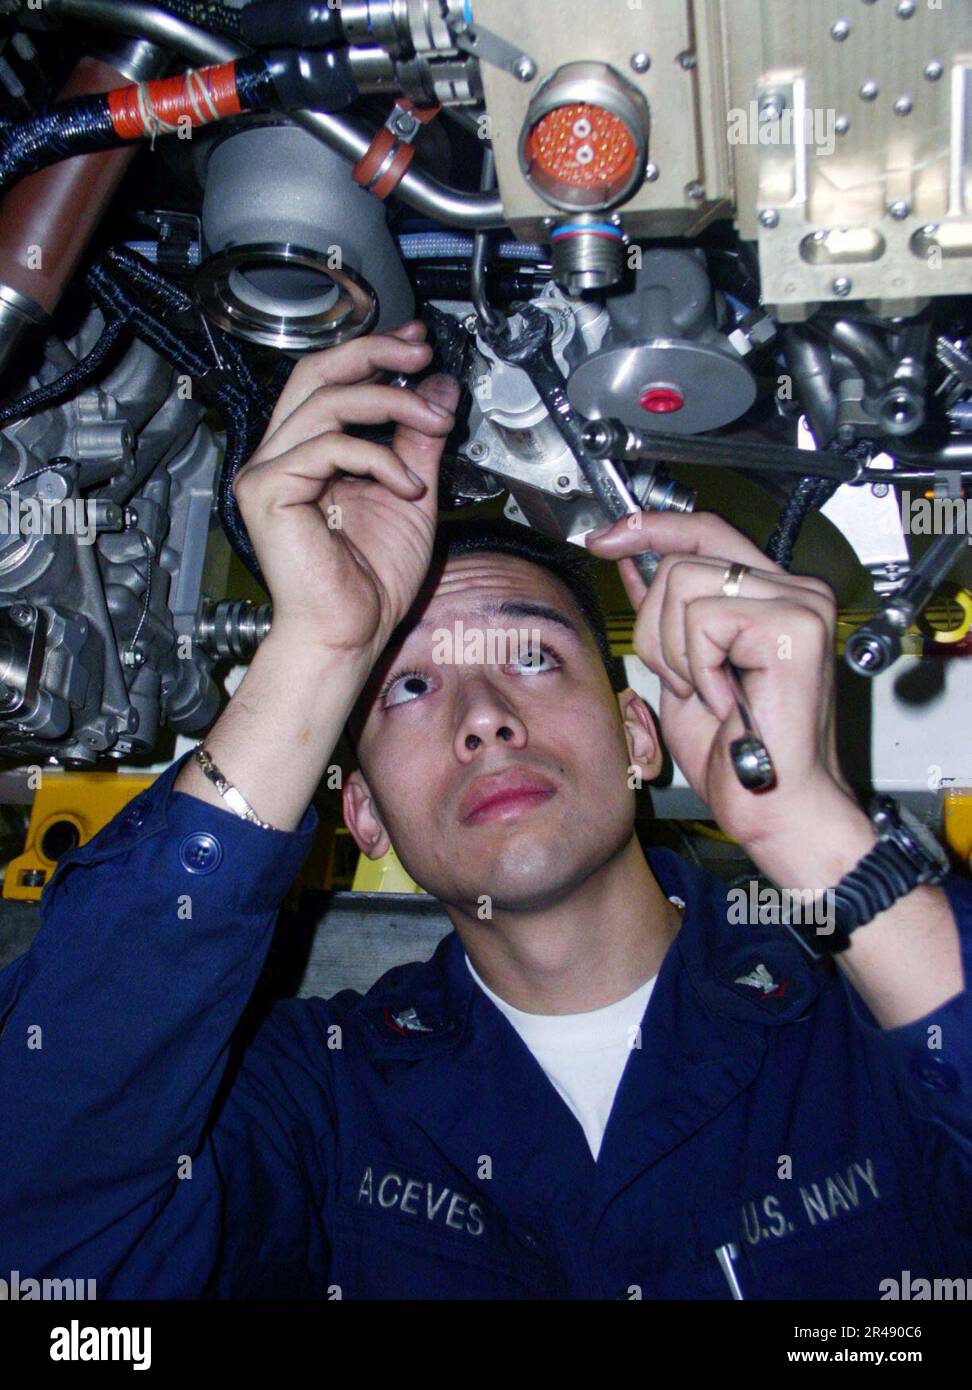 US Navy Aviation Machinist's Mate Stock Photo - Alamy